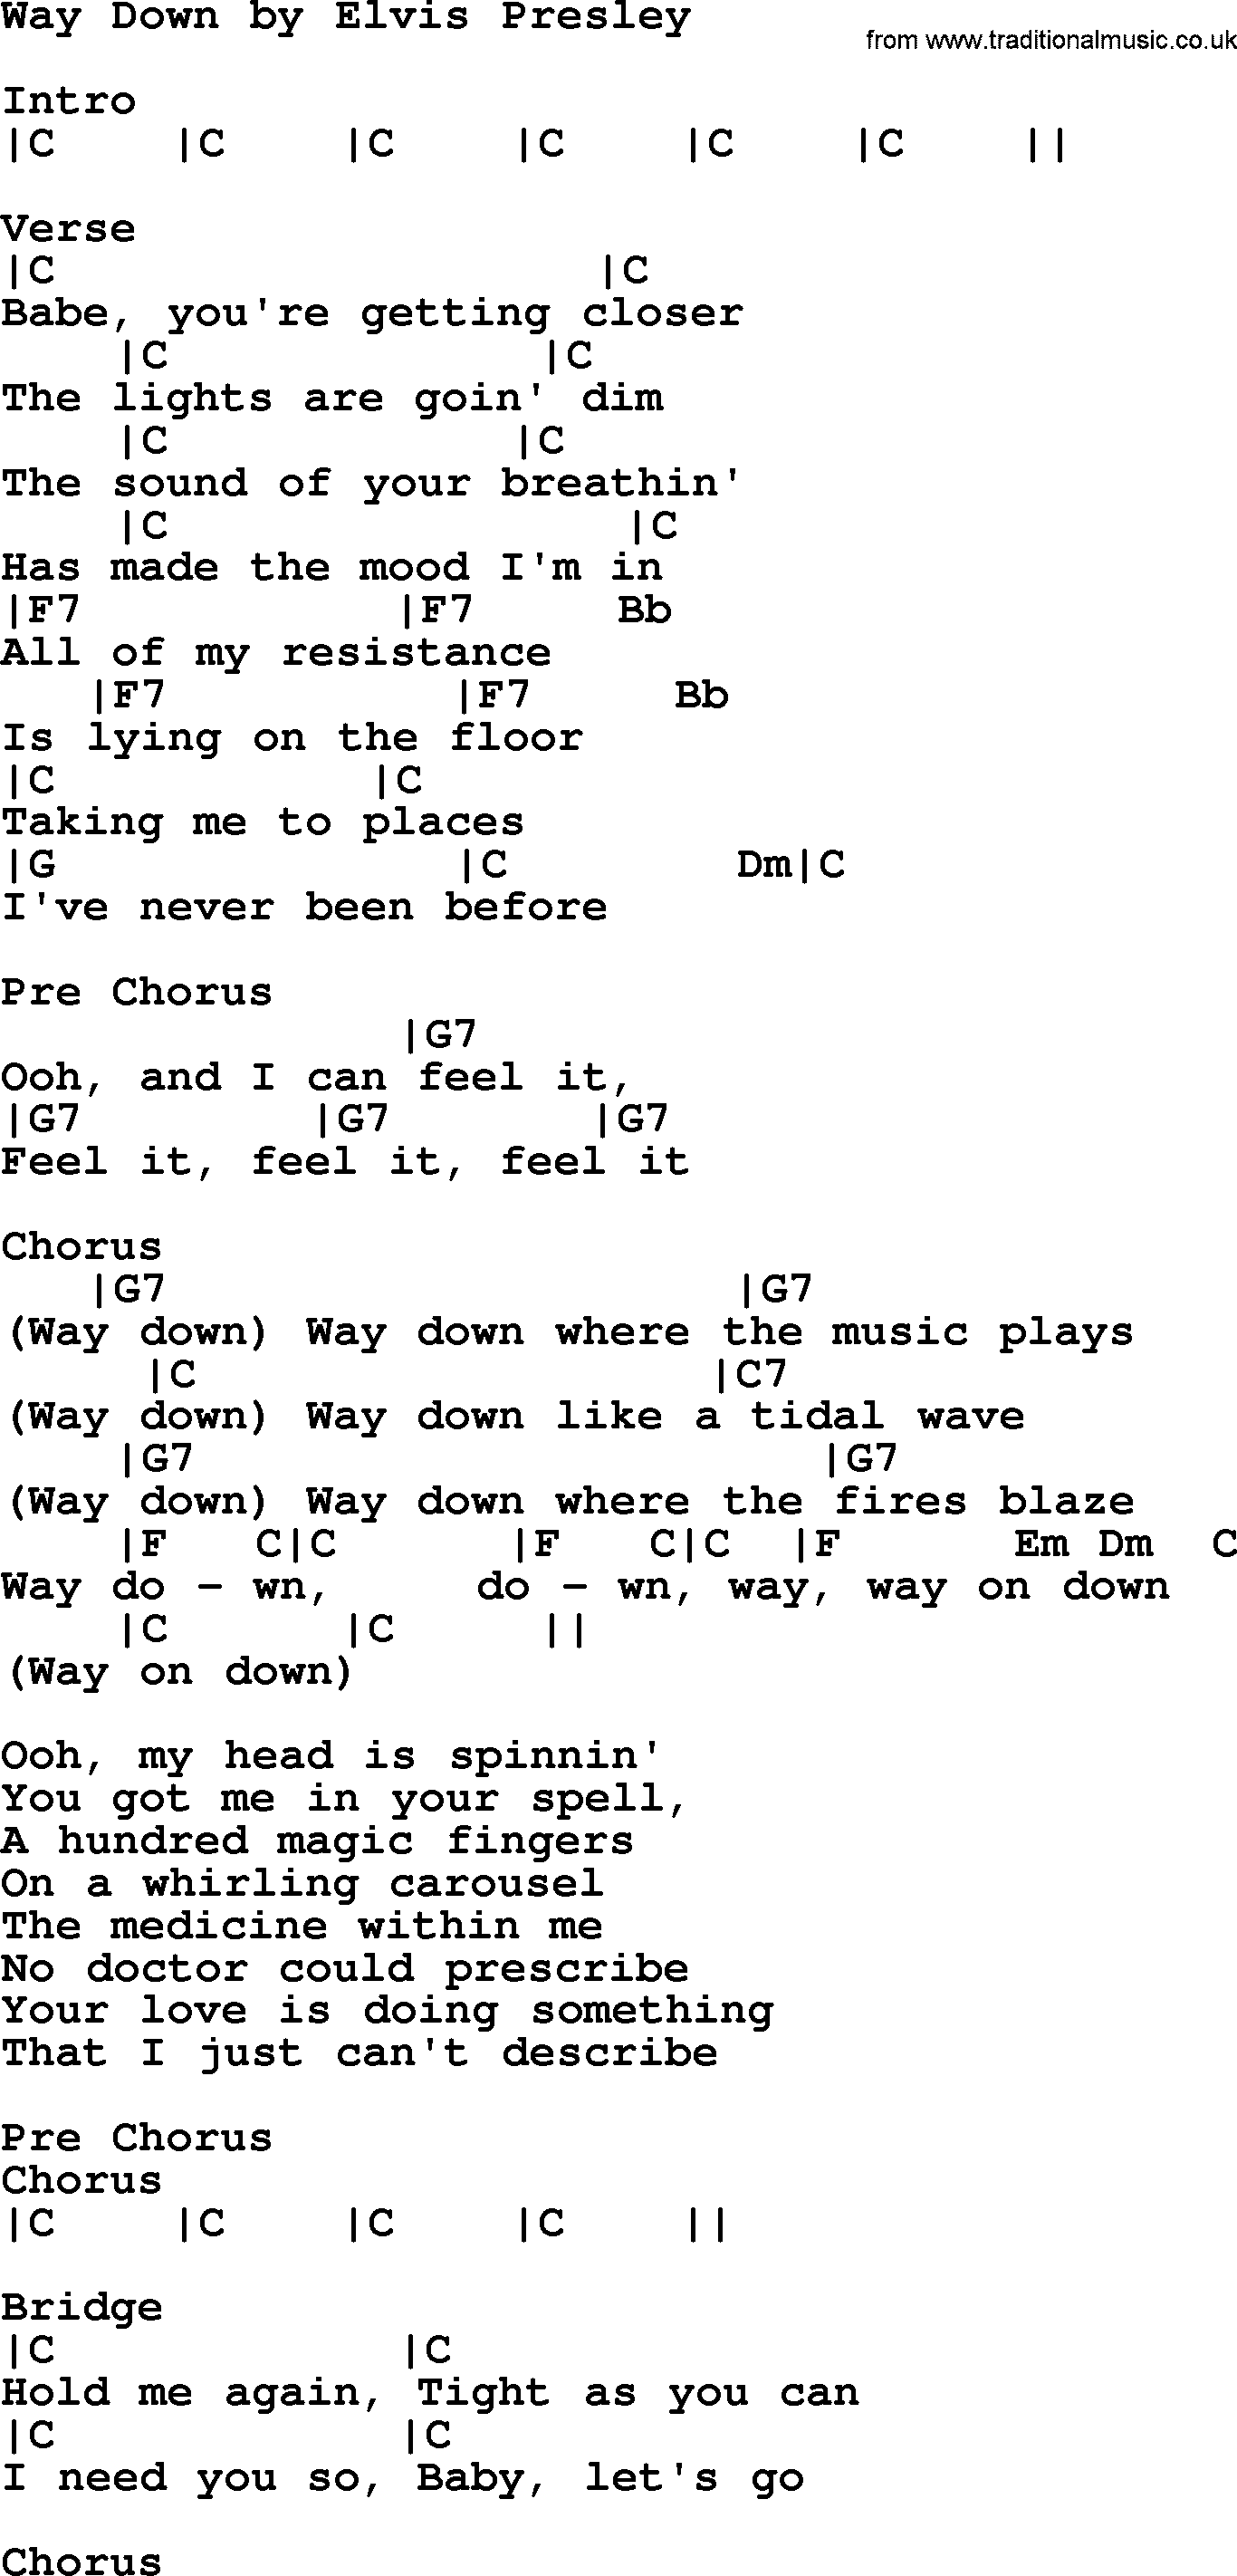 Elvis Presley song: Way Down, lyrics and chords